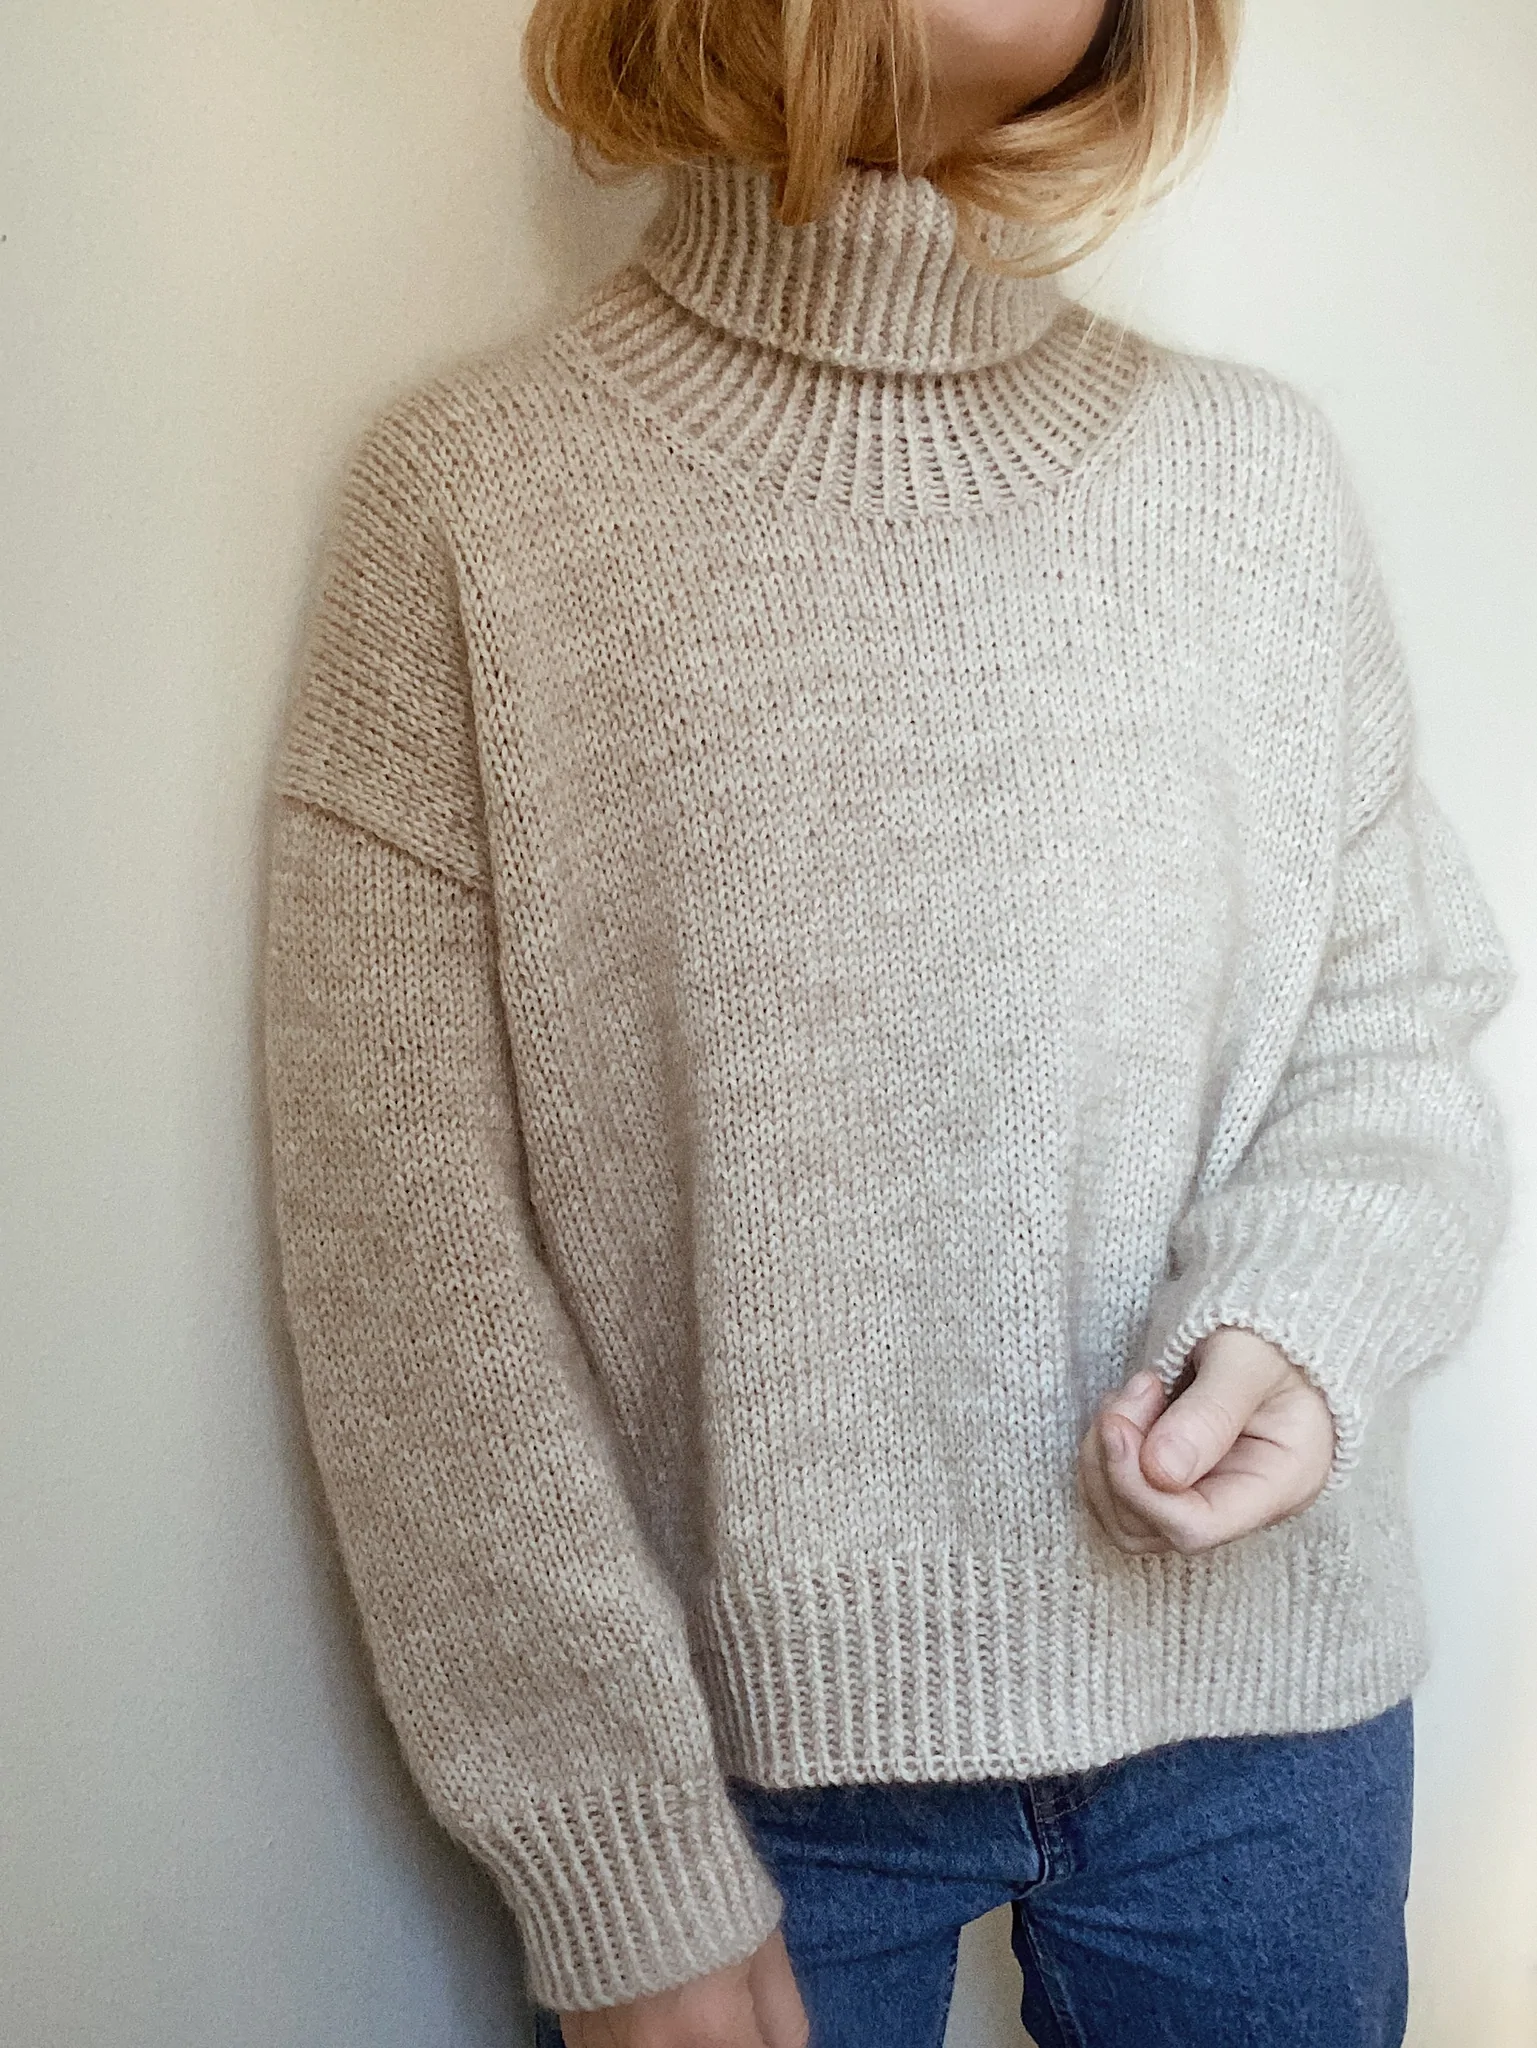 Strickset | Sweater No. 11